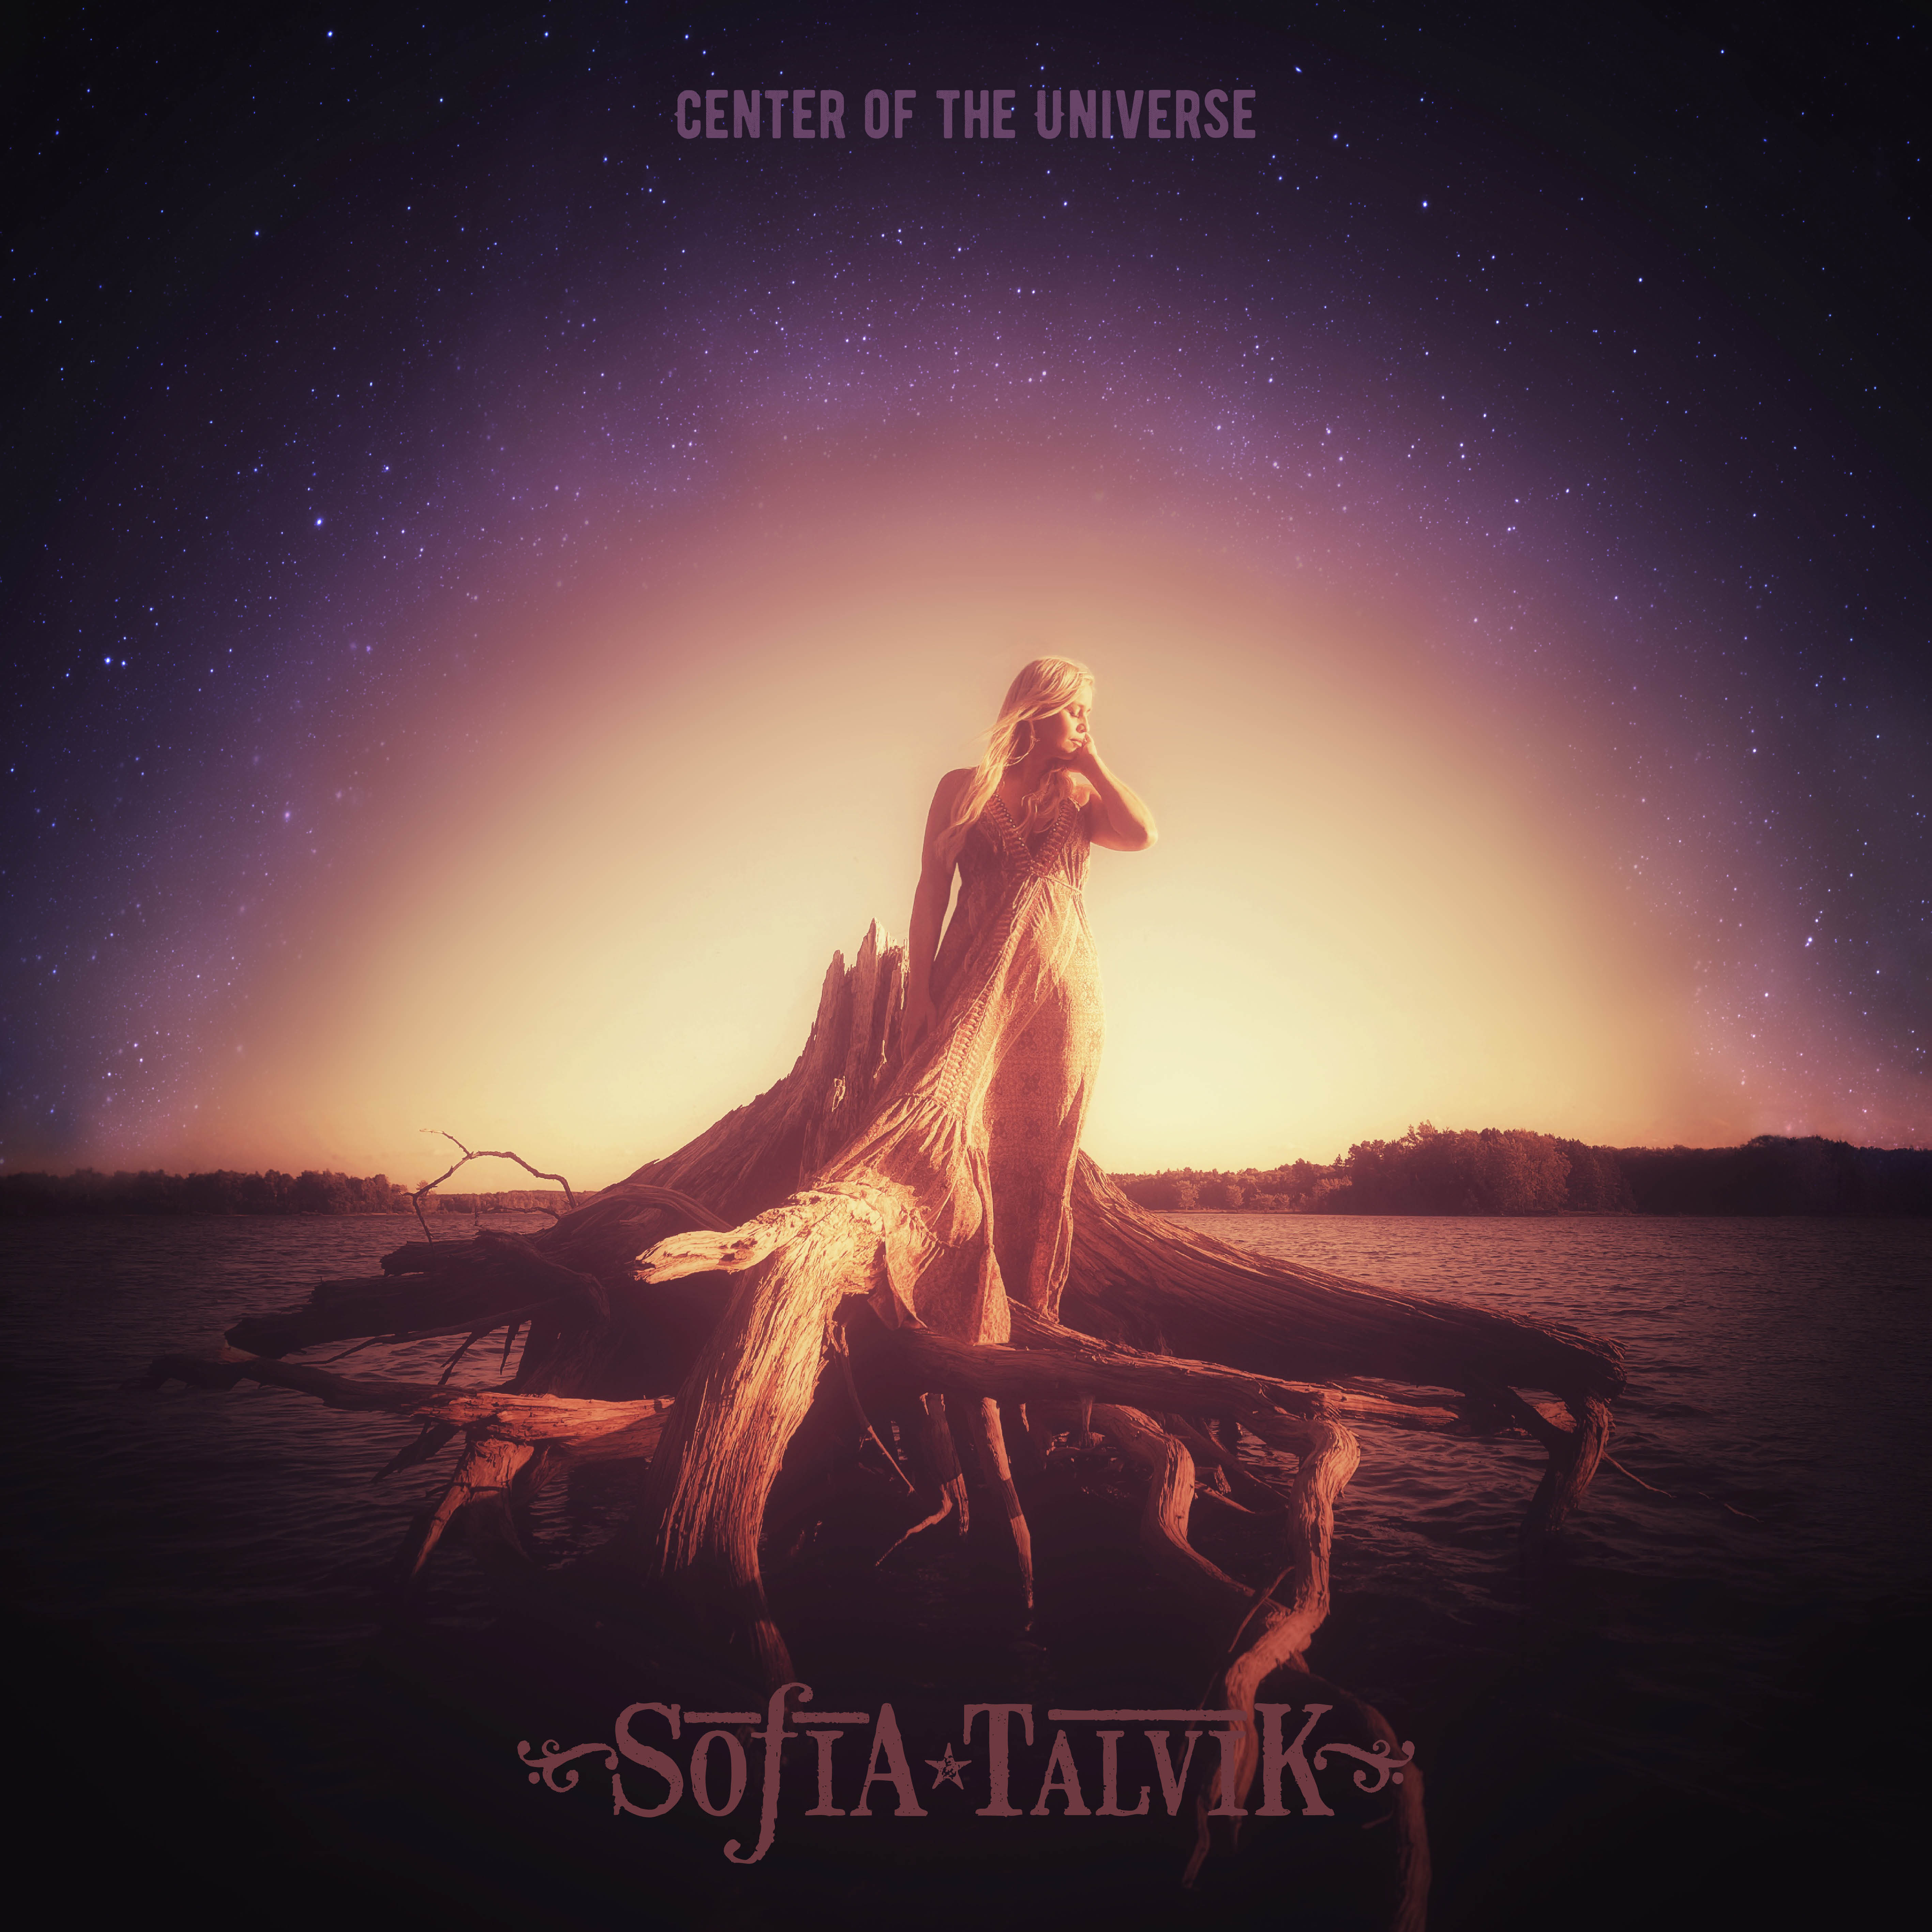 Sofia Talvik releases 9th album, ‘Center of the Universe’